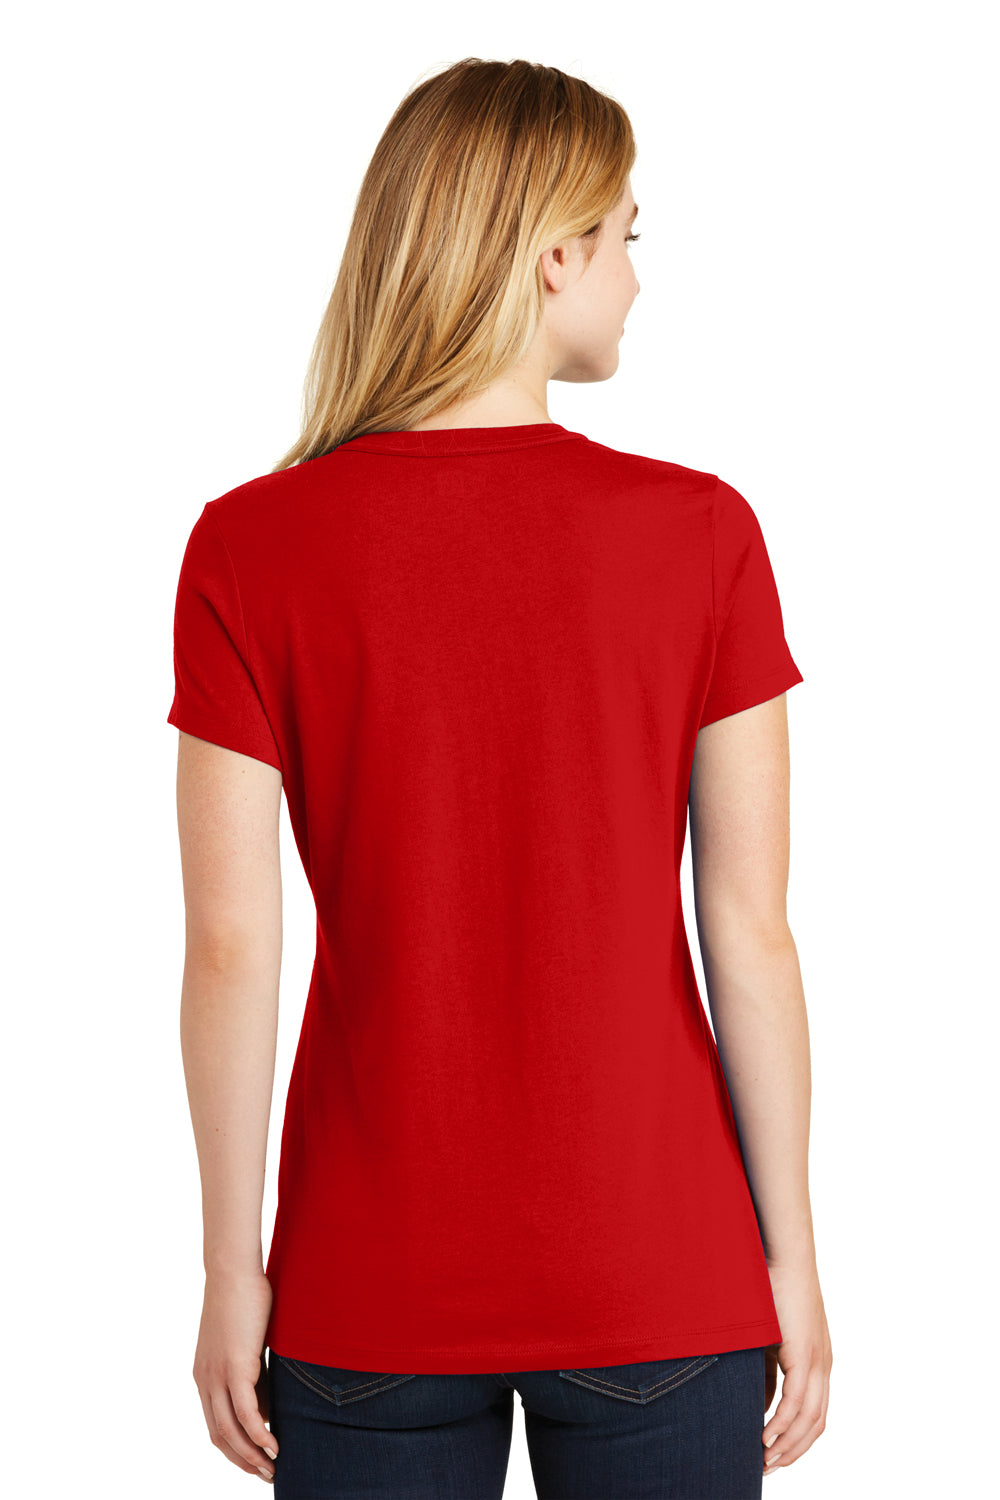 New Era LNEA100 Womens Heritage Short Sleeve Crewneck T-Shirt Red Back